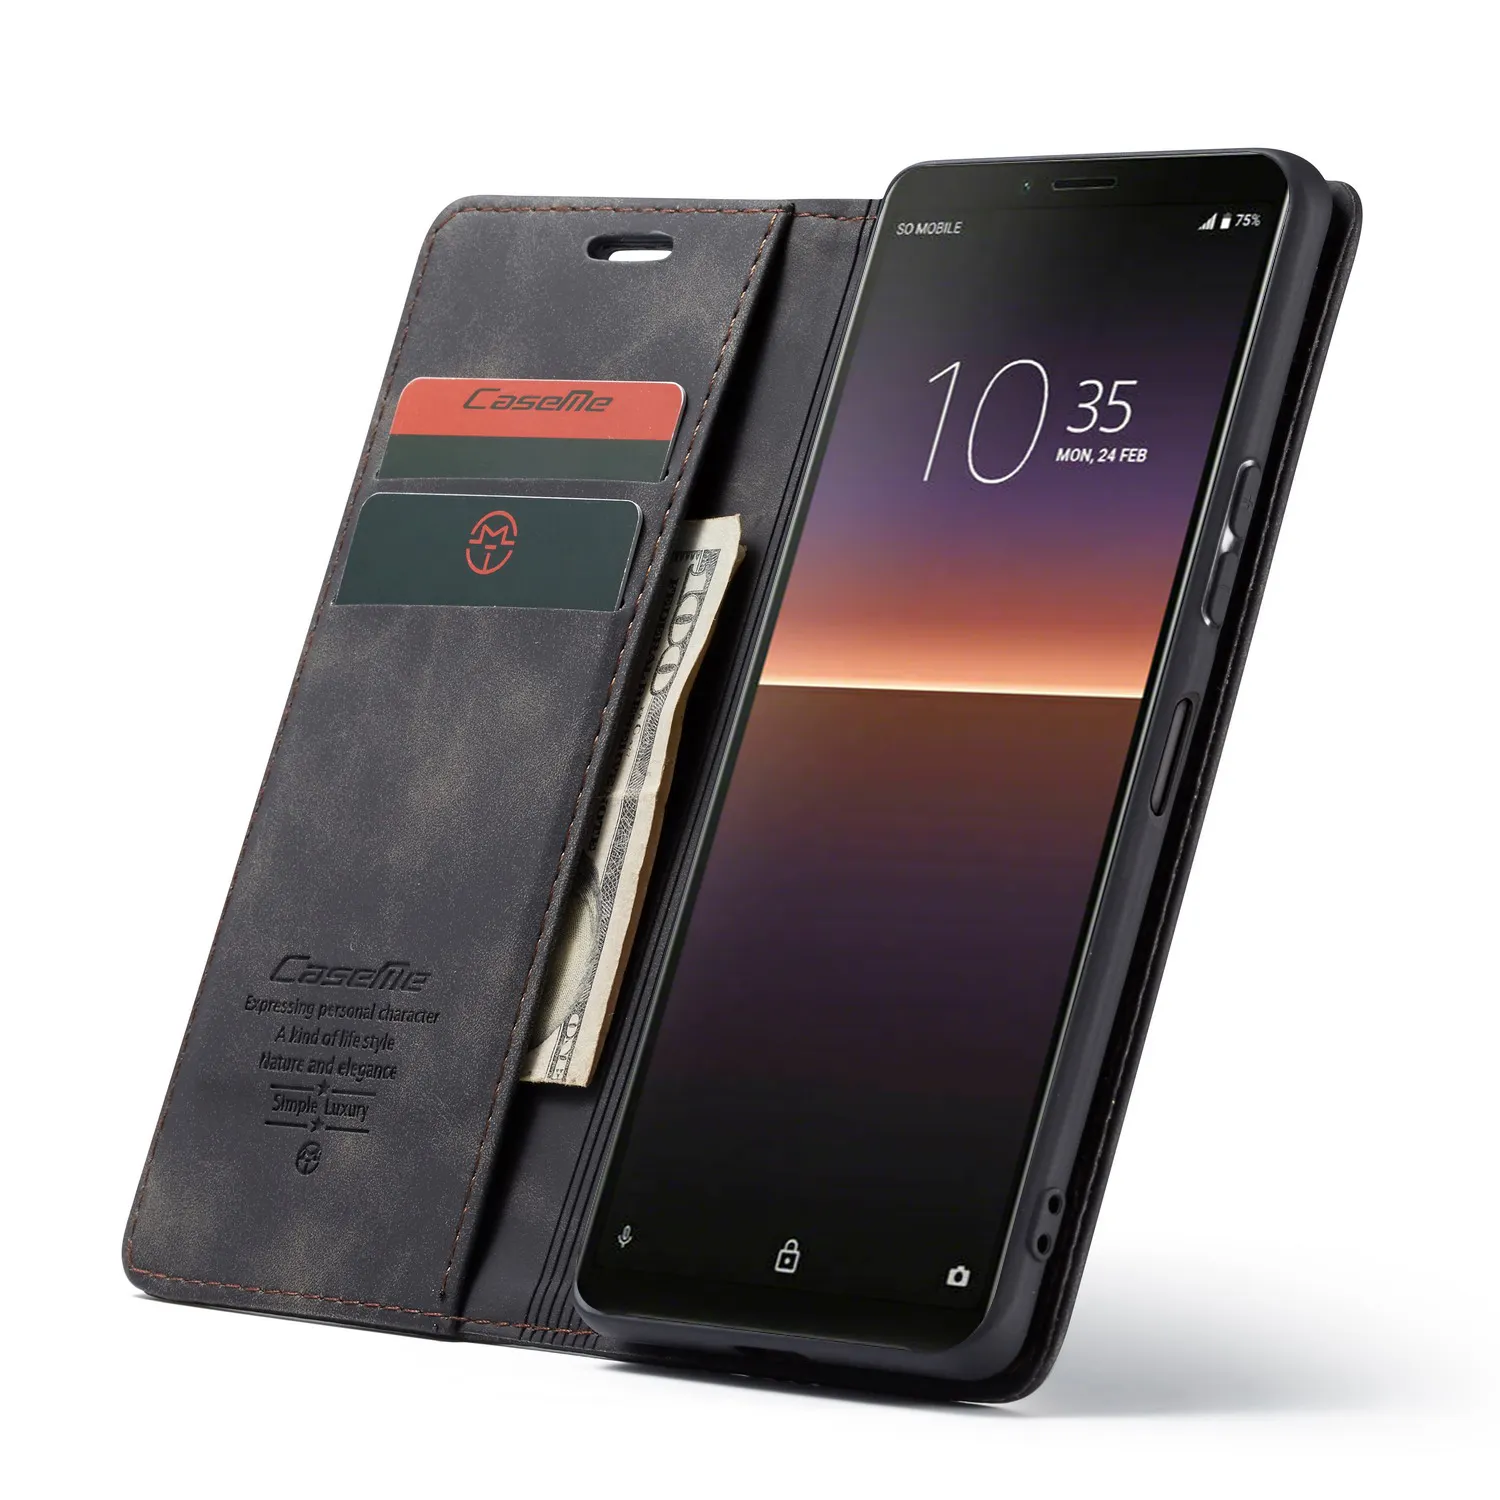 CaseMe 2020 New DesignためLG G6 G7 G8 G5 V20 V10 Case Accessories Mobile Phone Cover Retro ColorfulためSony Xperia 1 II Case